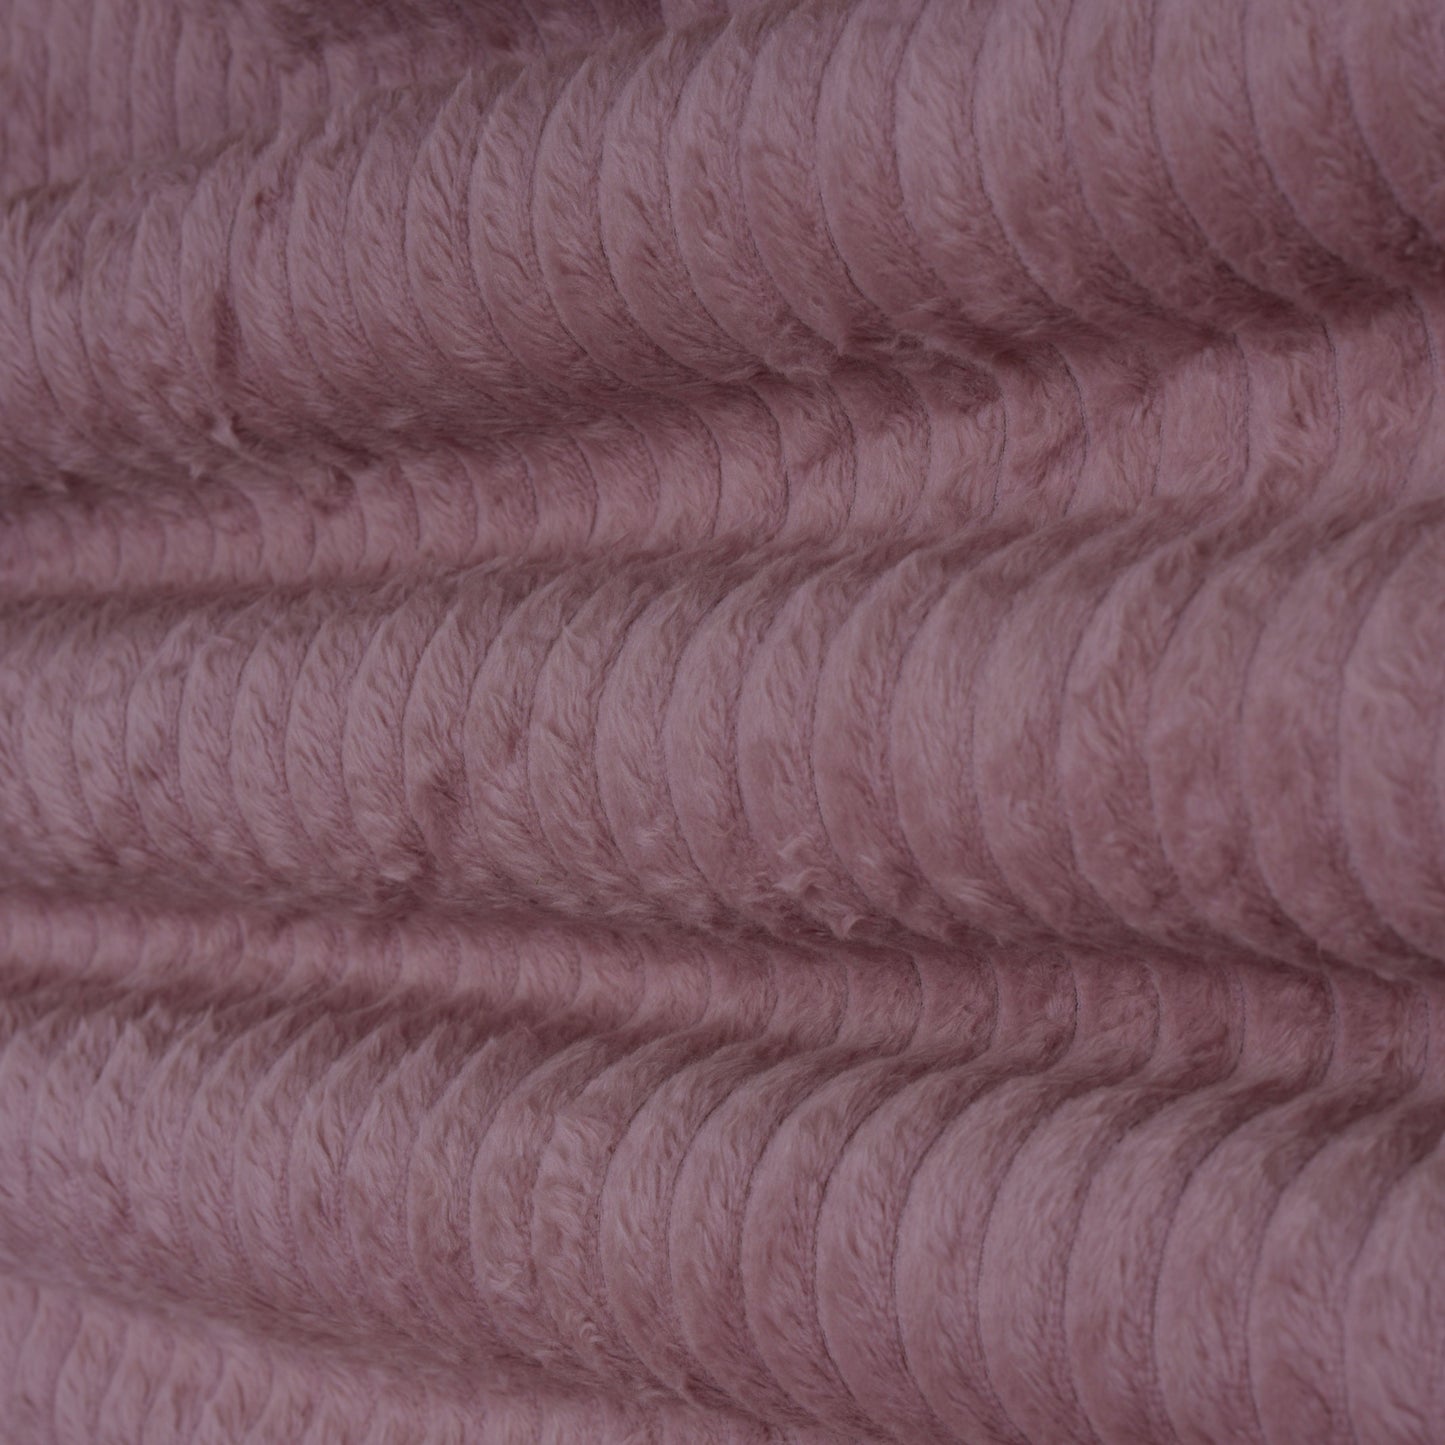 Woolen Fur Fabric